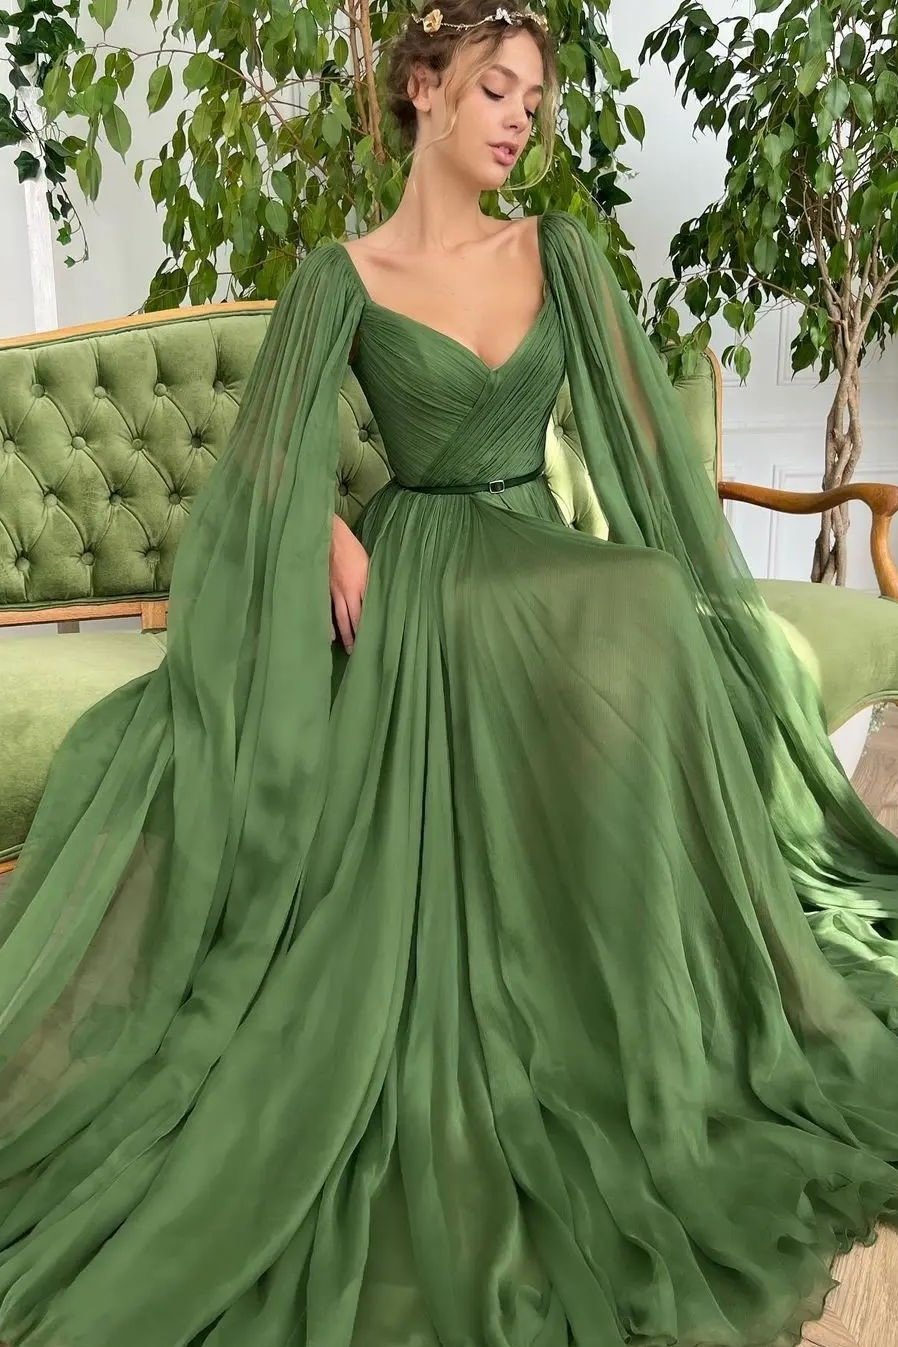 Newest Green Long Sleeves Tulle Prom Dress With Belt | Ballbellas Ballbellas